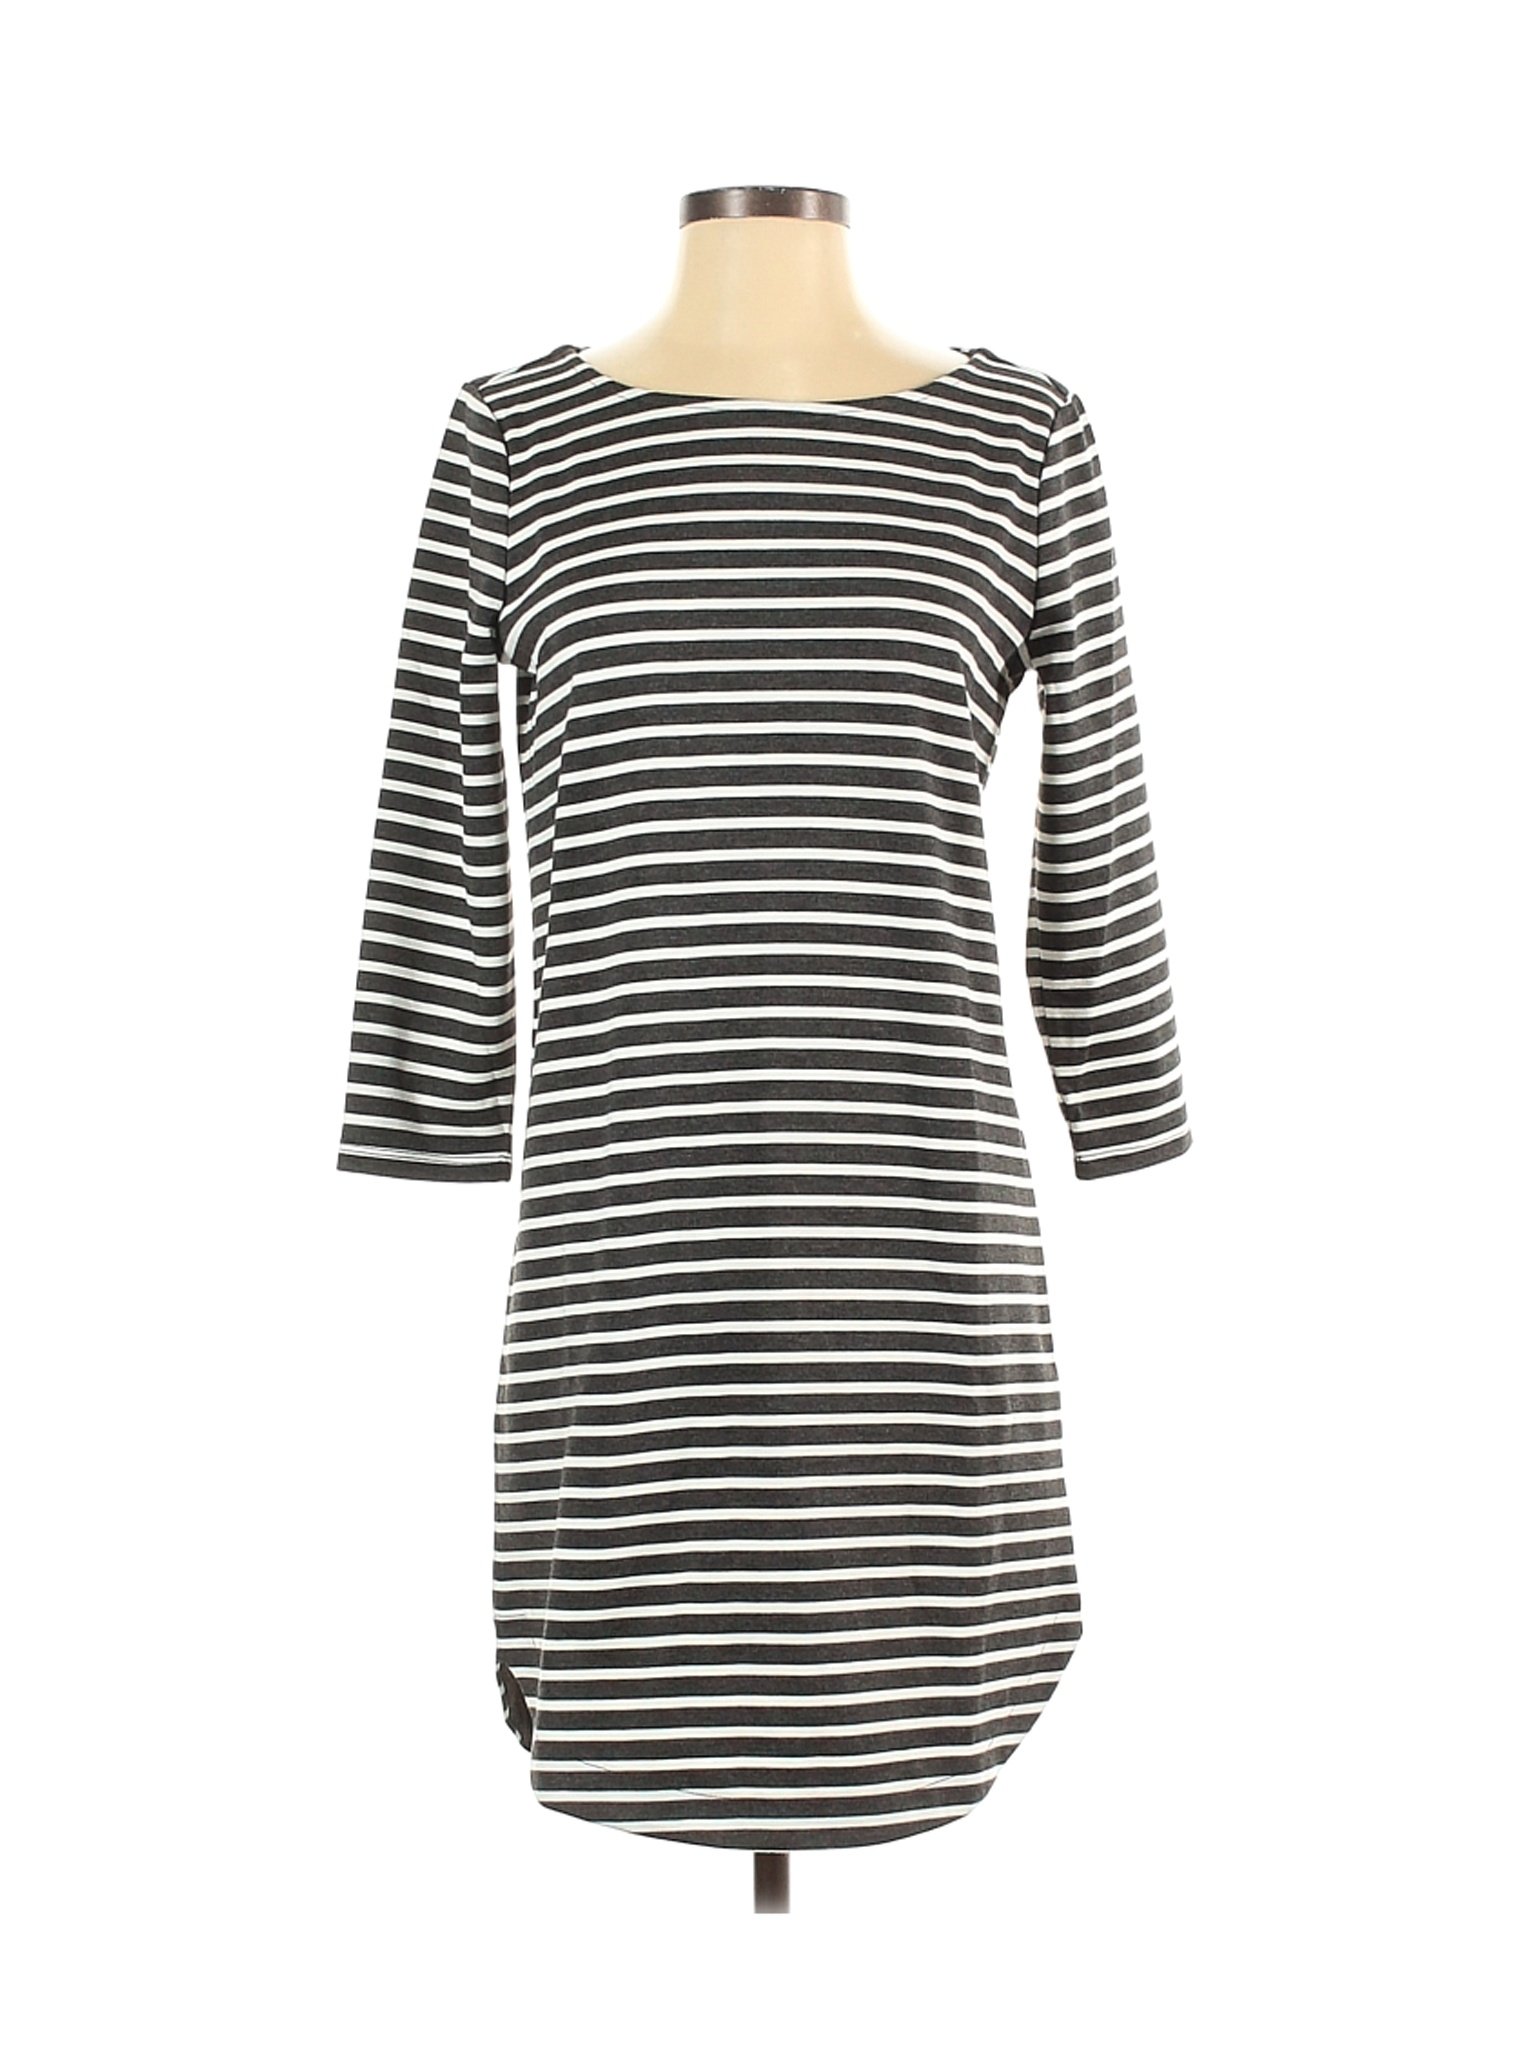 NWT Gap Women Gray Casual Dress XS | eBay